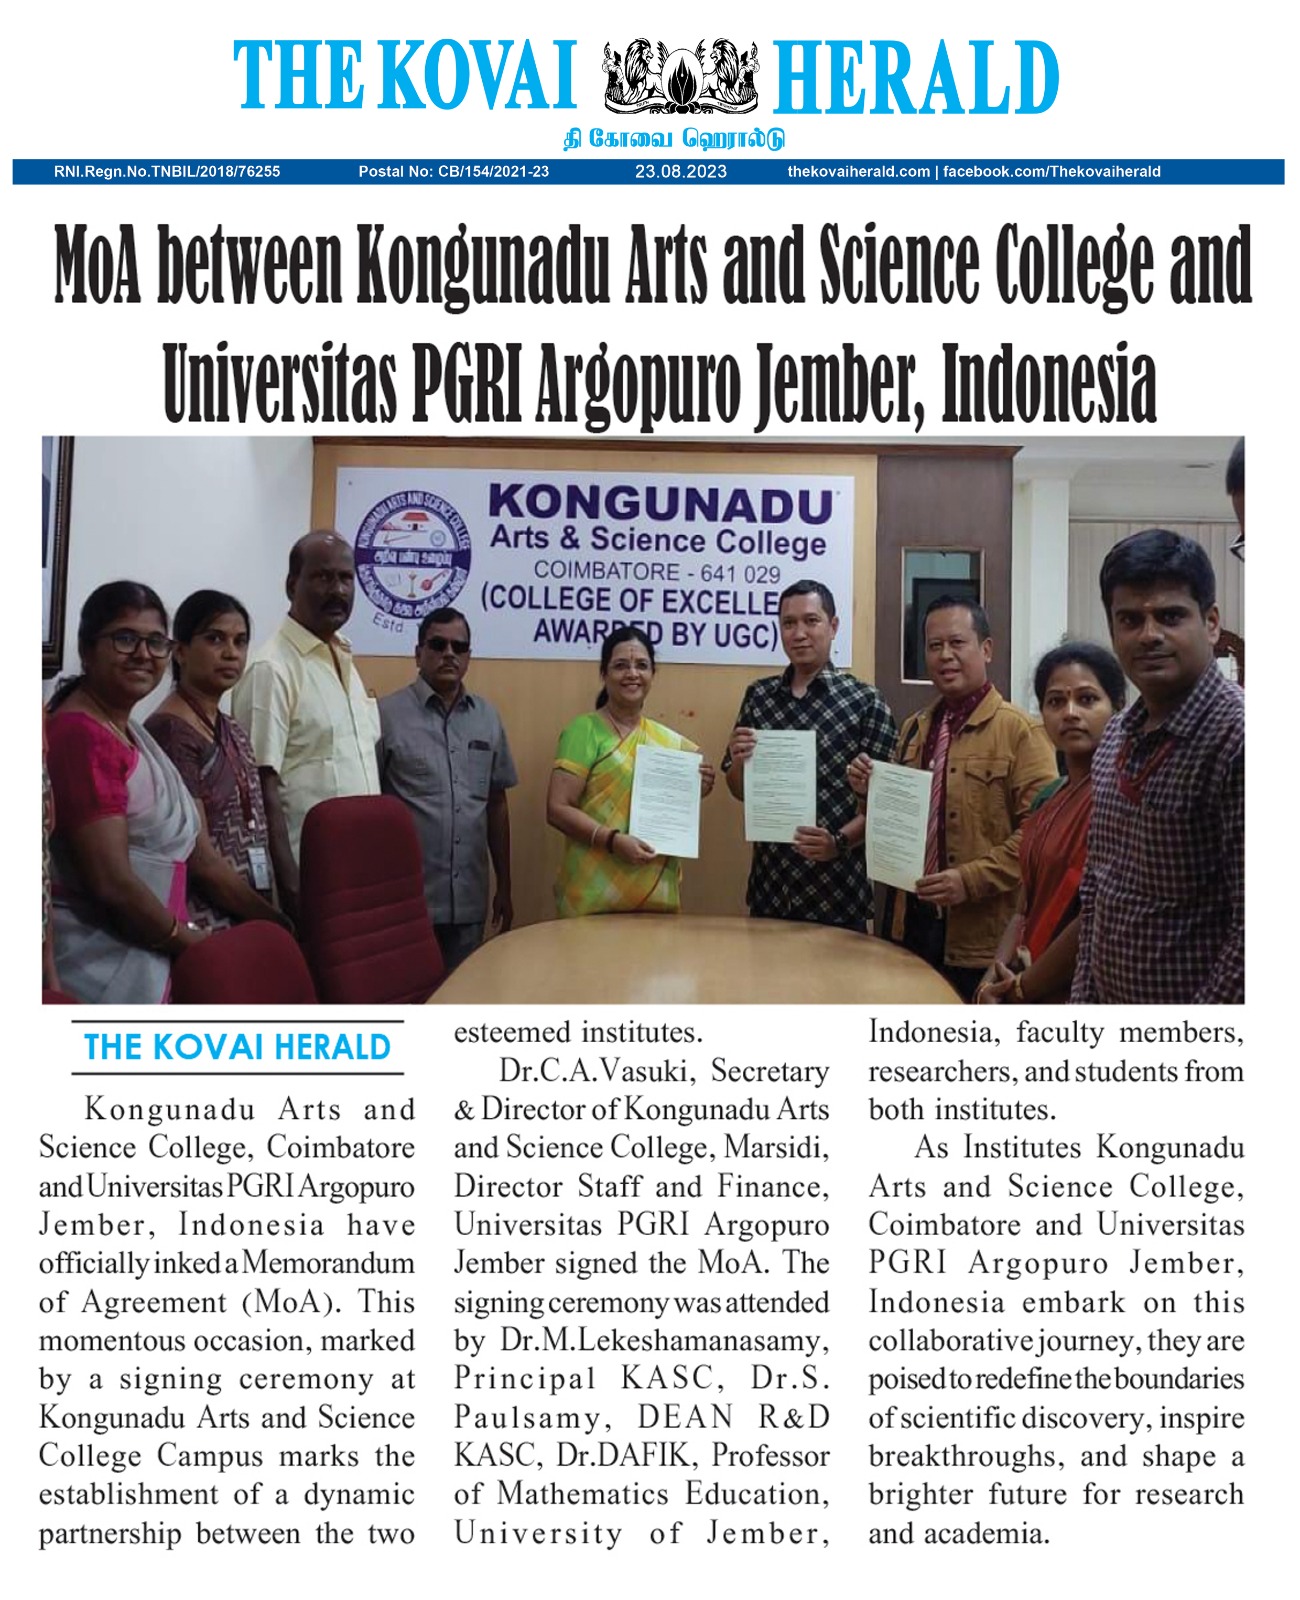  KASC international academic collaboration UNPAIR